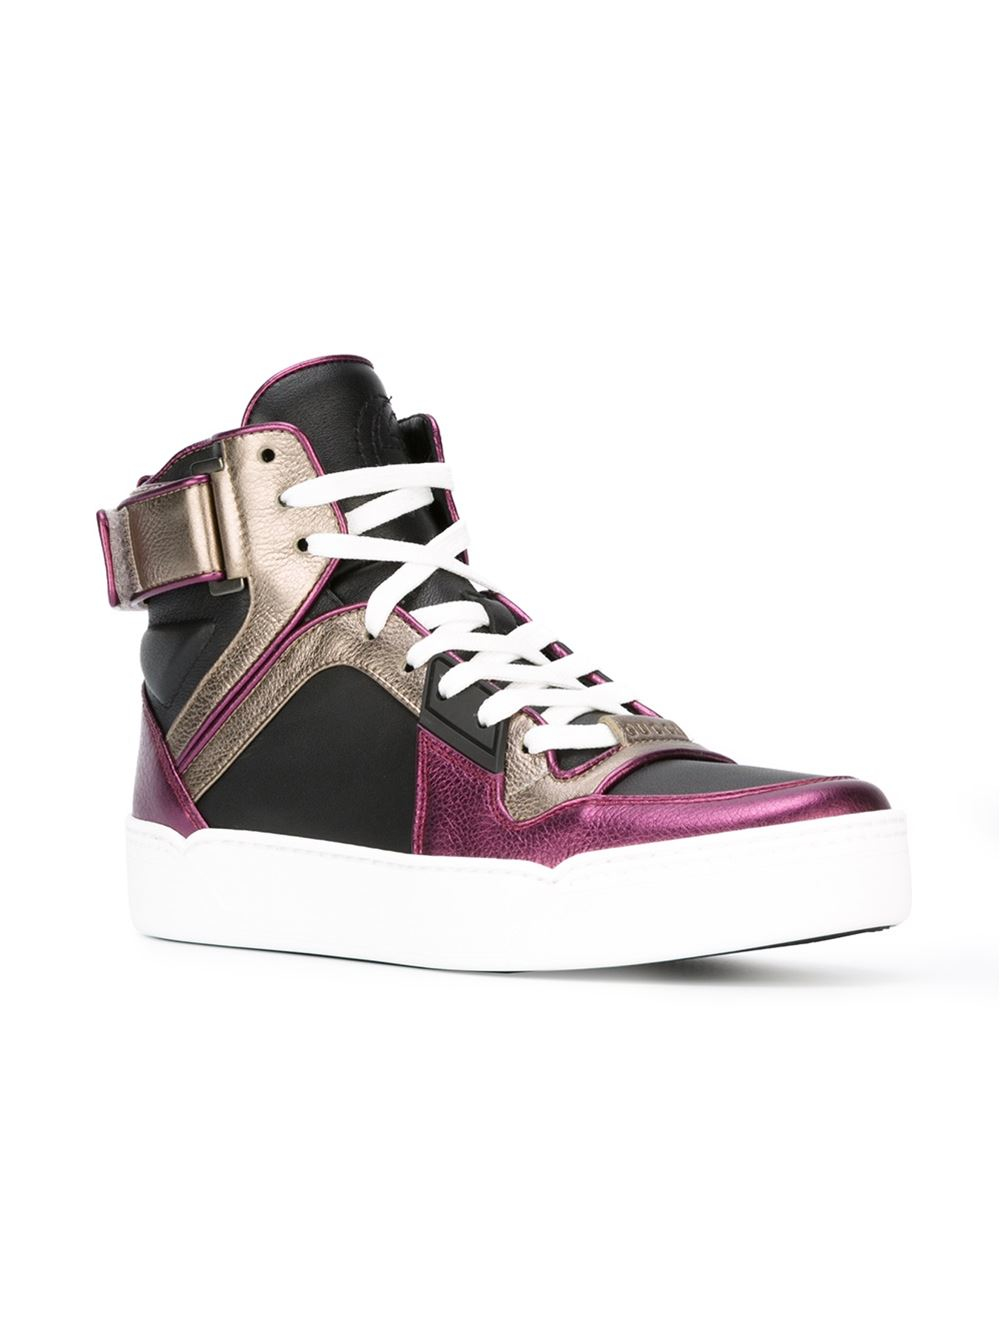 Lyst - Gucci Metallic Leather Sneakers in Purple